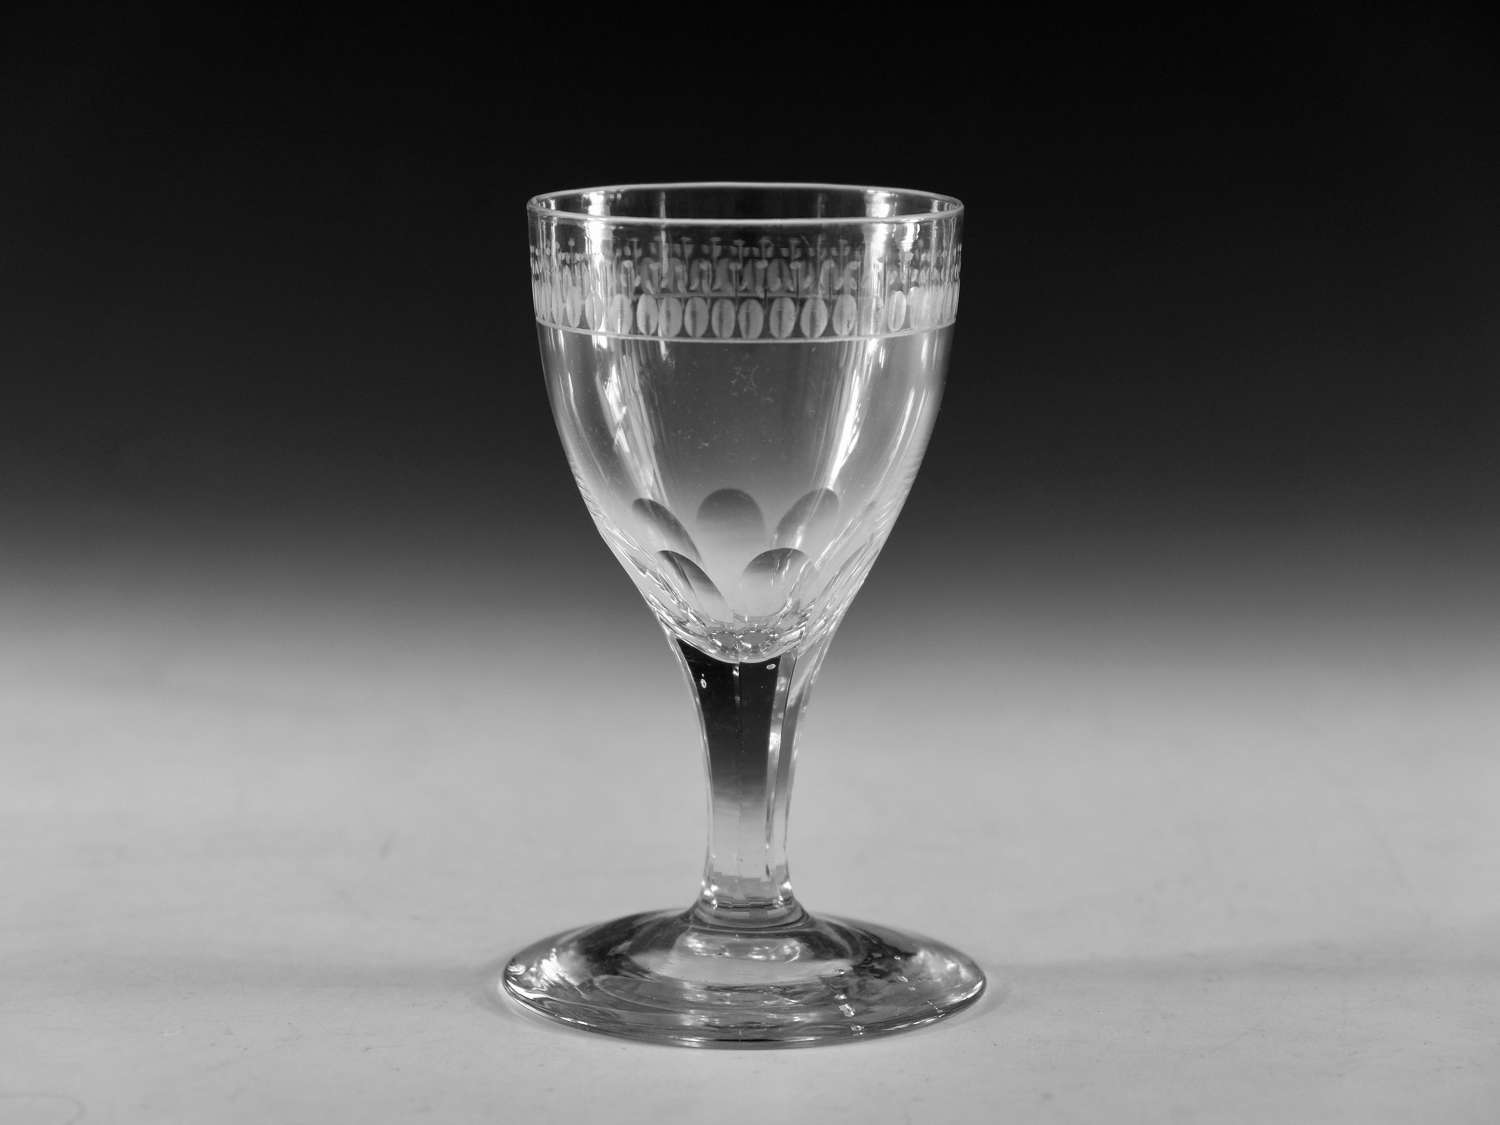 Antique glass - wine glass English c1790-1800.